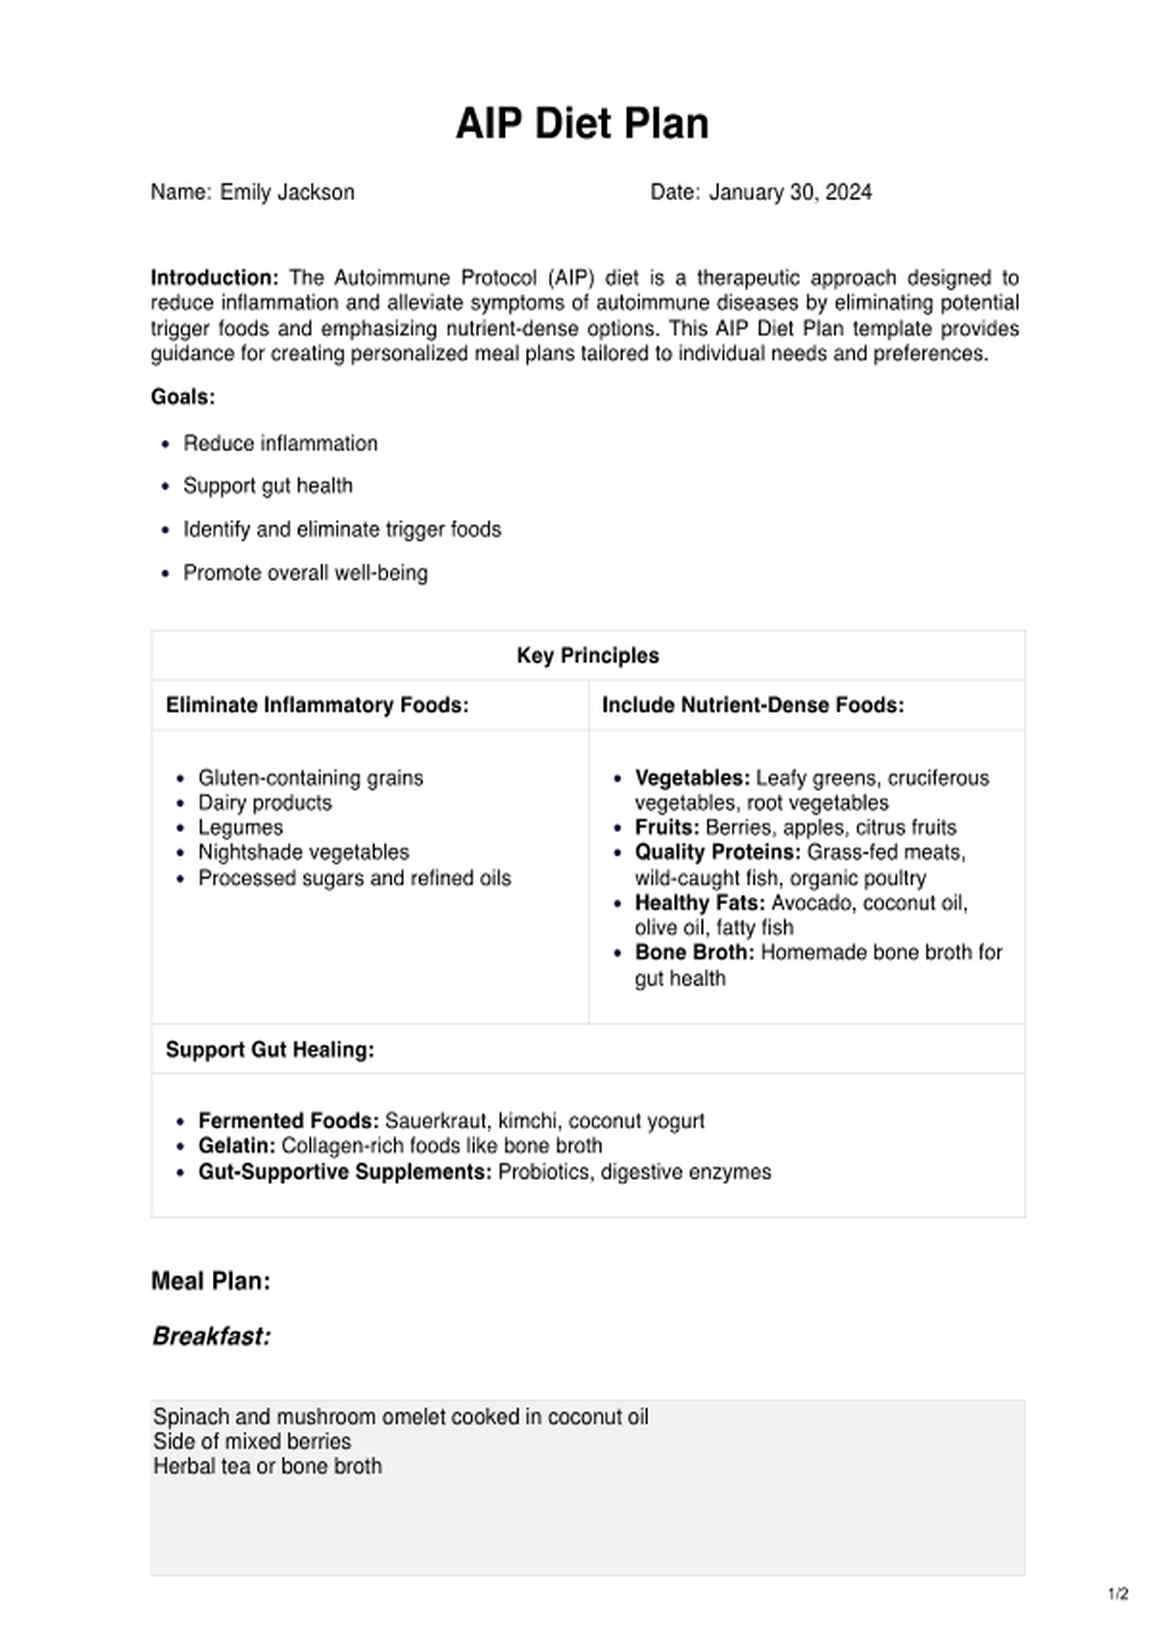 AIP diet plan PDF PDF Example